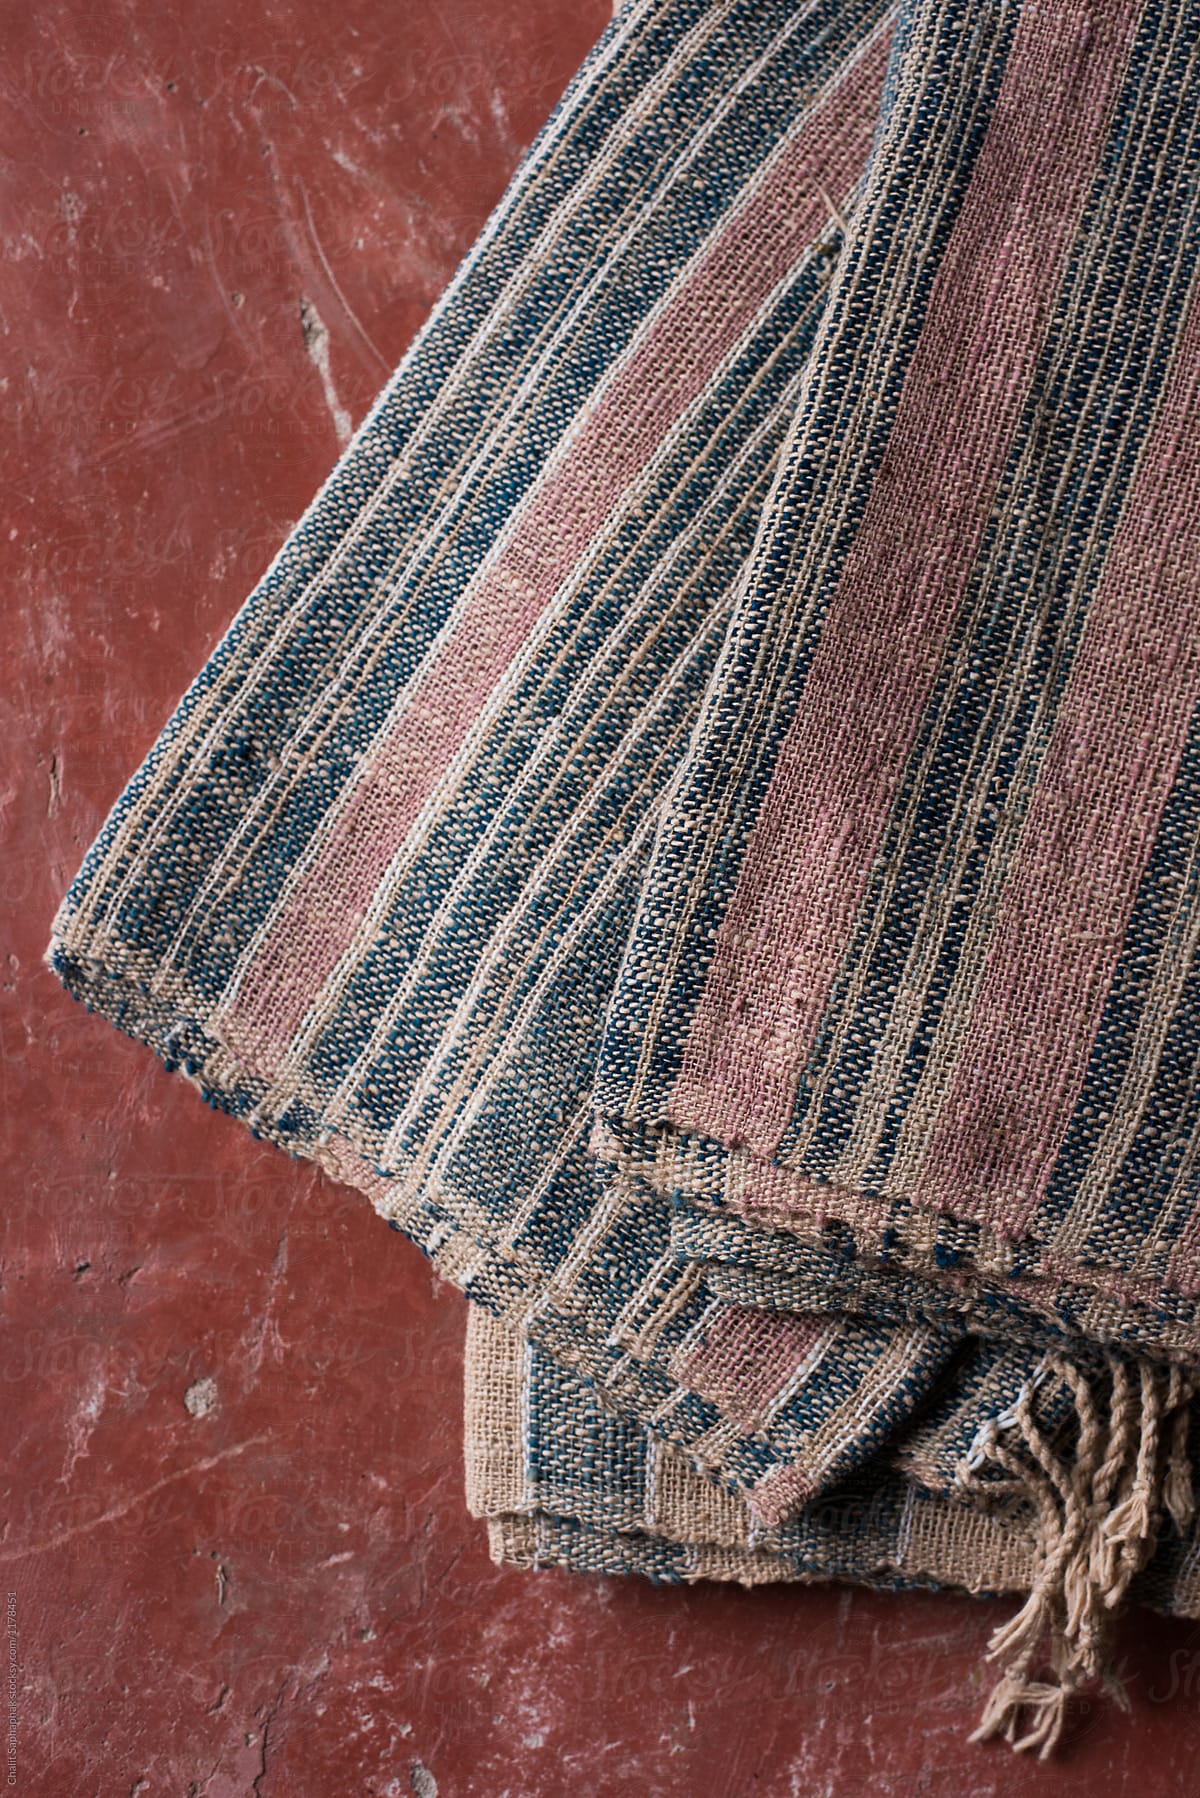 Traditional Indigo Fabric